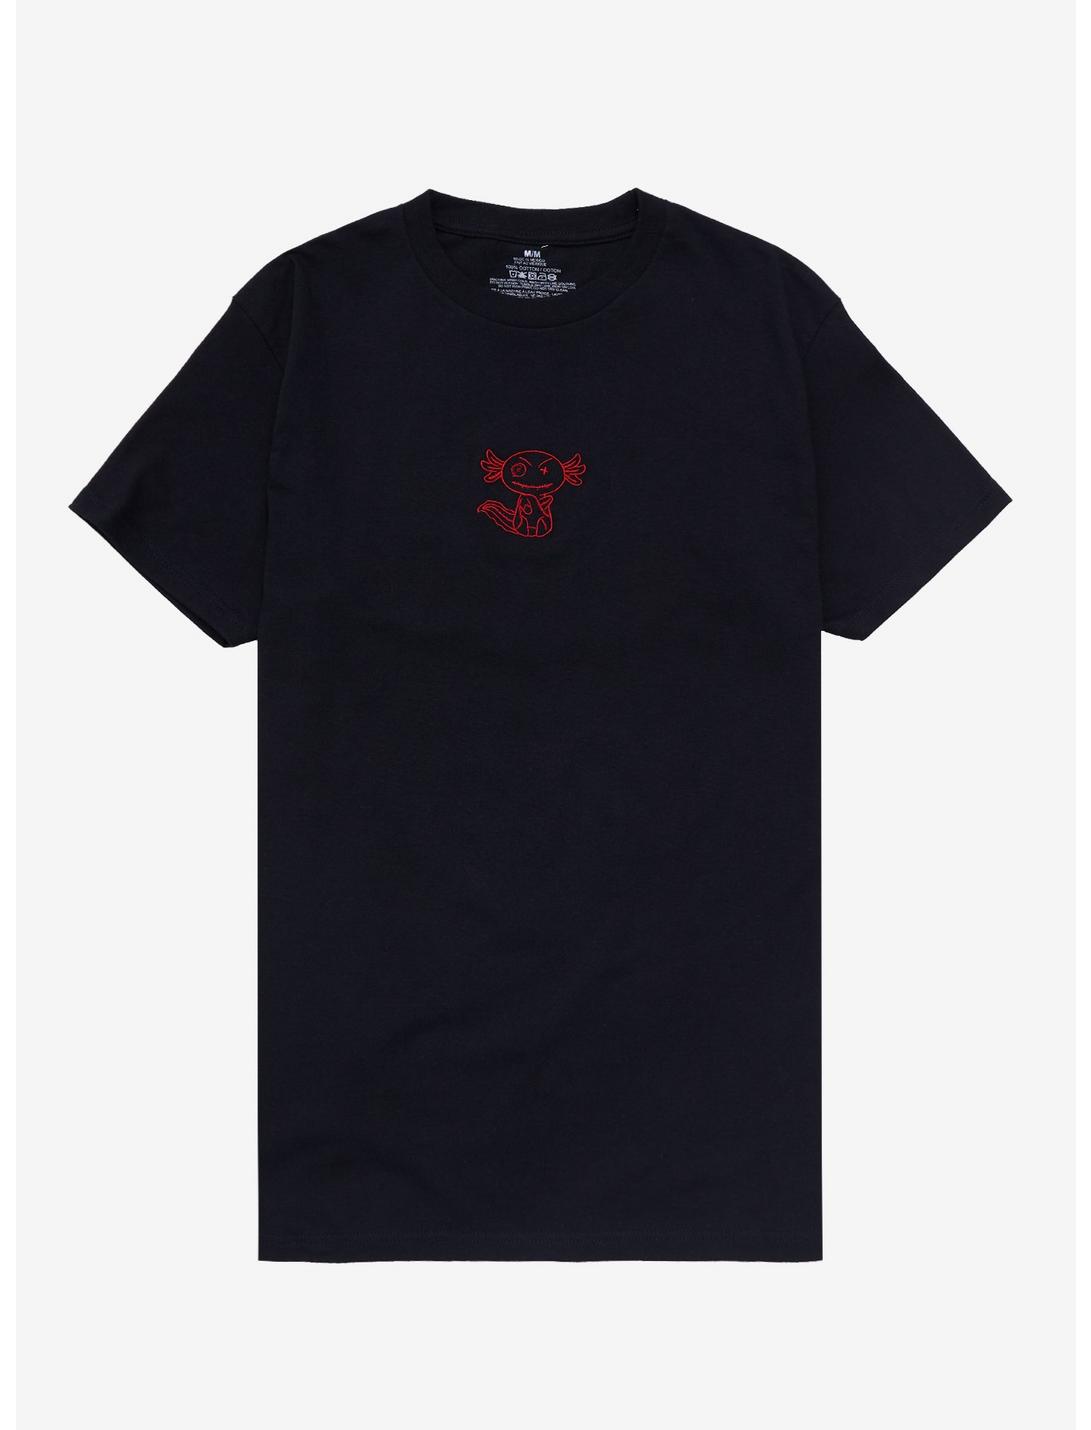 Dark Axolotl Ragdoll Embroidery T-Shirt | Hot Topic